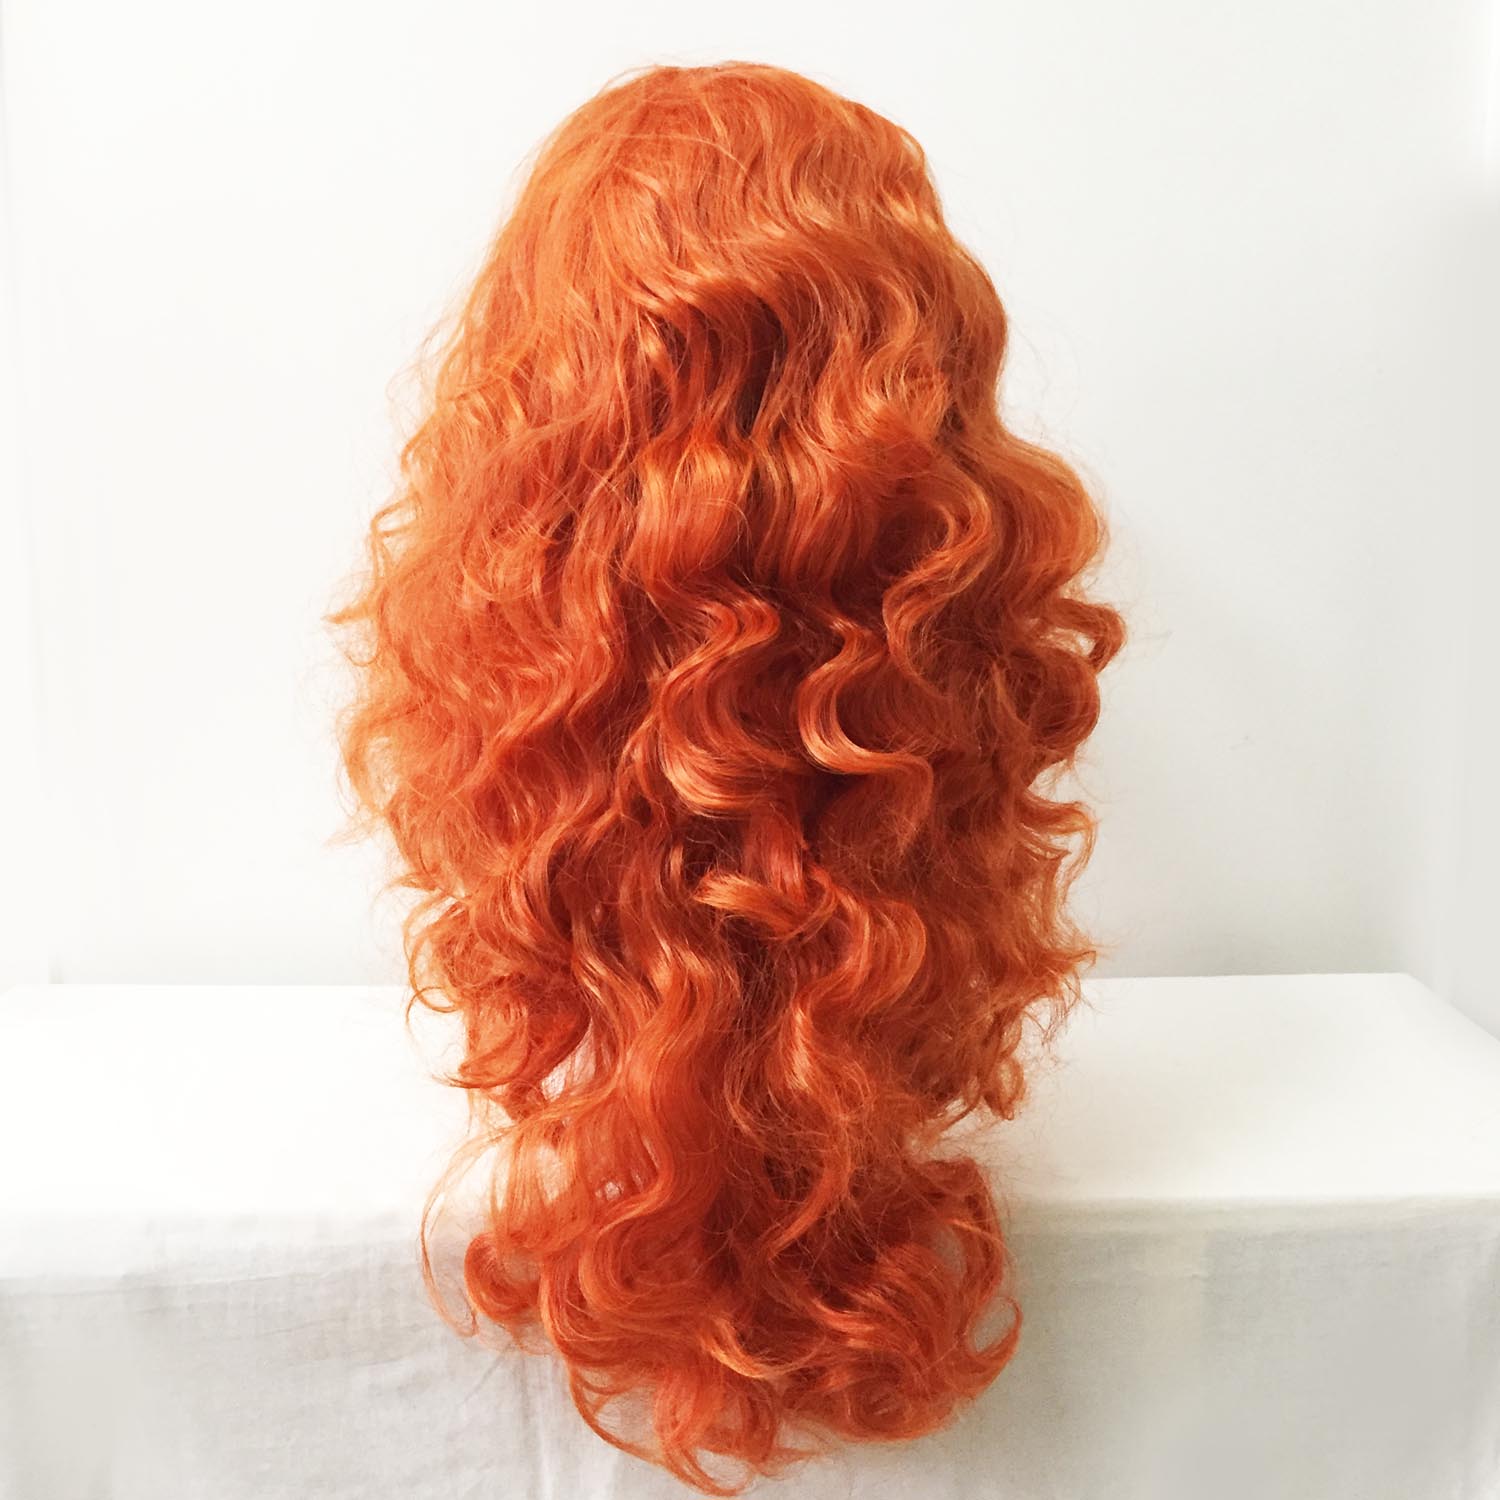 nevermindyrhead Women Orange Long Curly Slicked Back Fluffy Cosplay Wig